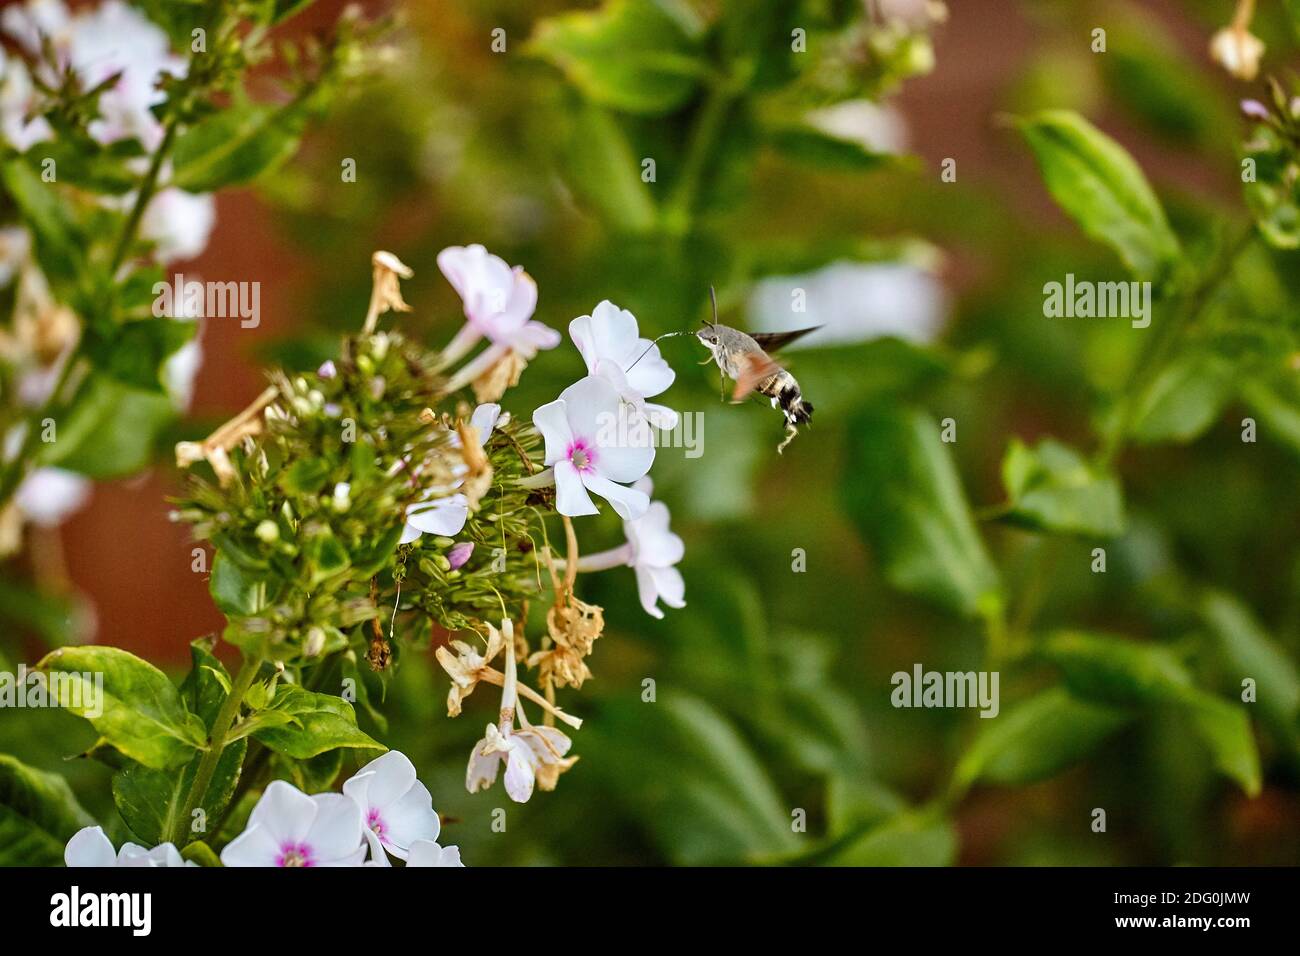 Macroglossum stellatarum motyl koliber na kwiatku floksa Stock Photo